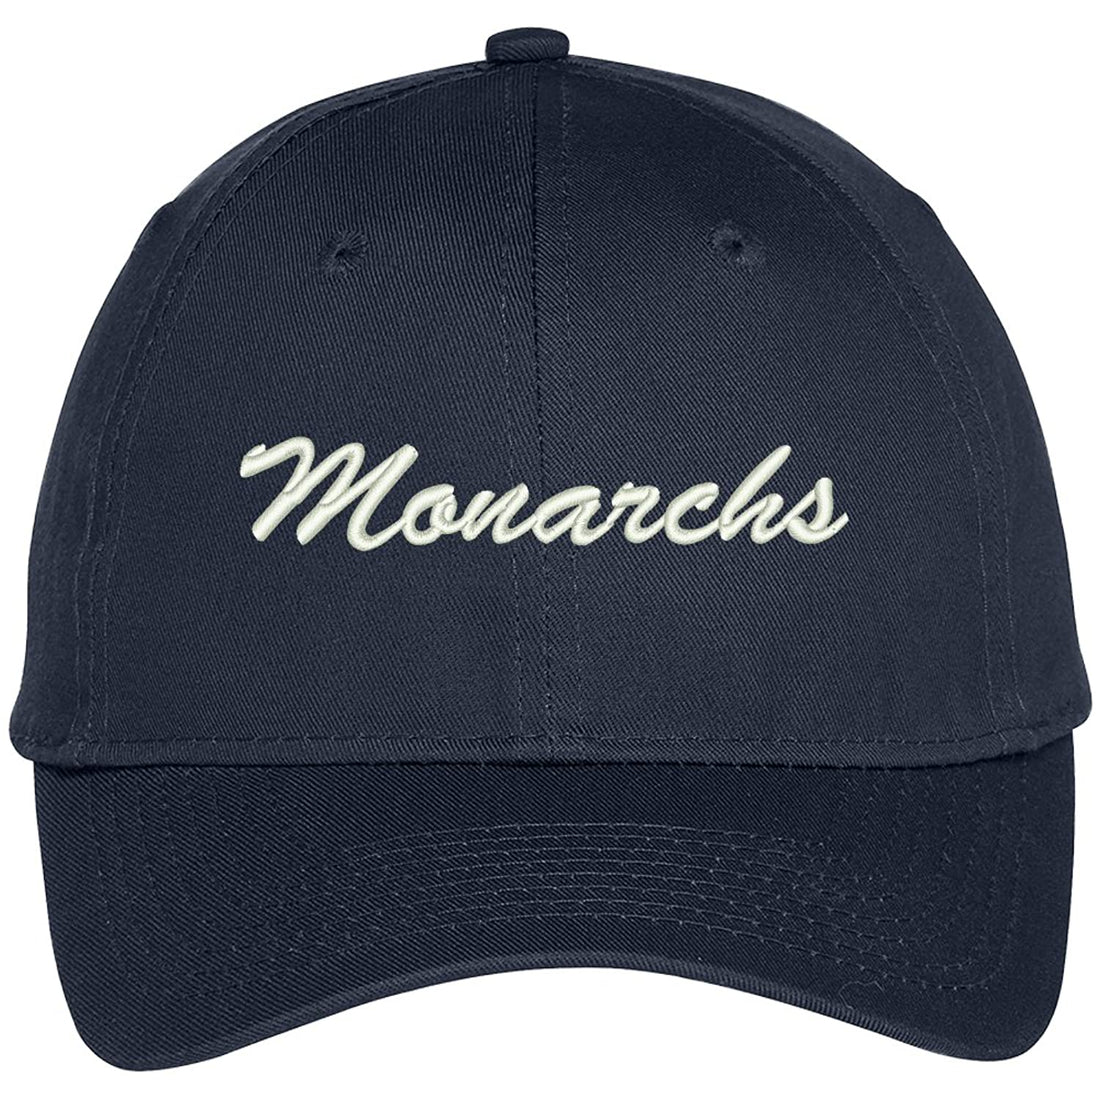 Trendy Apparel Shop Monarchs Embroidered Team Nickname Mascot Cap